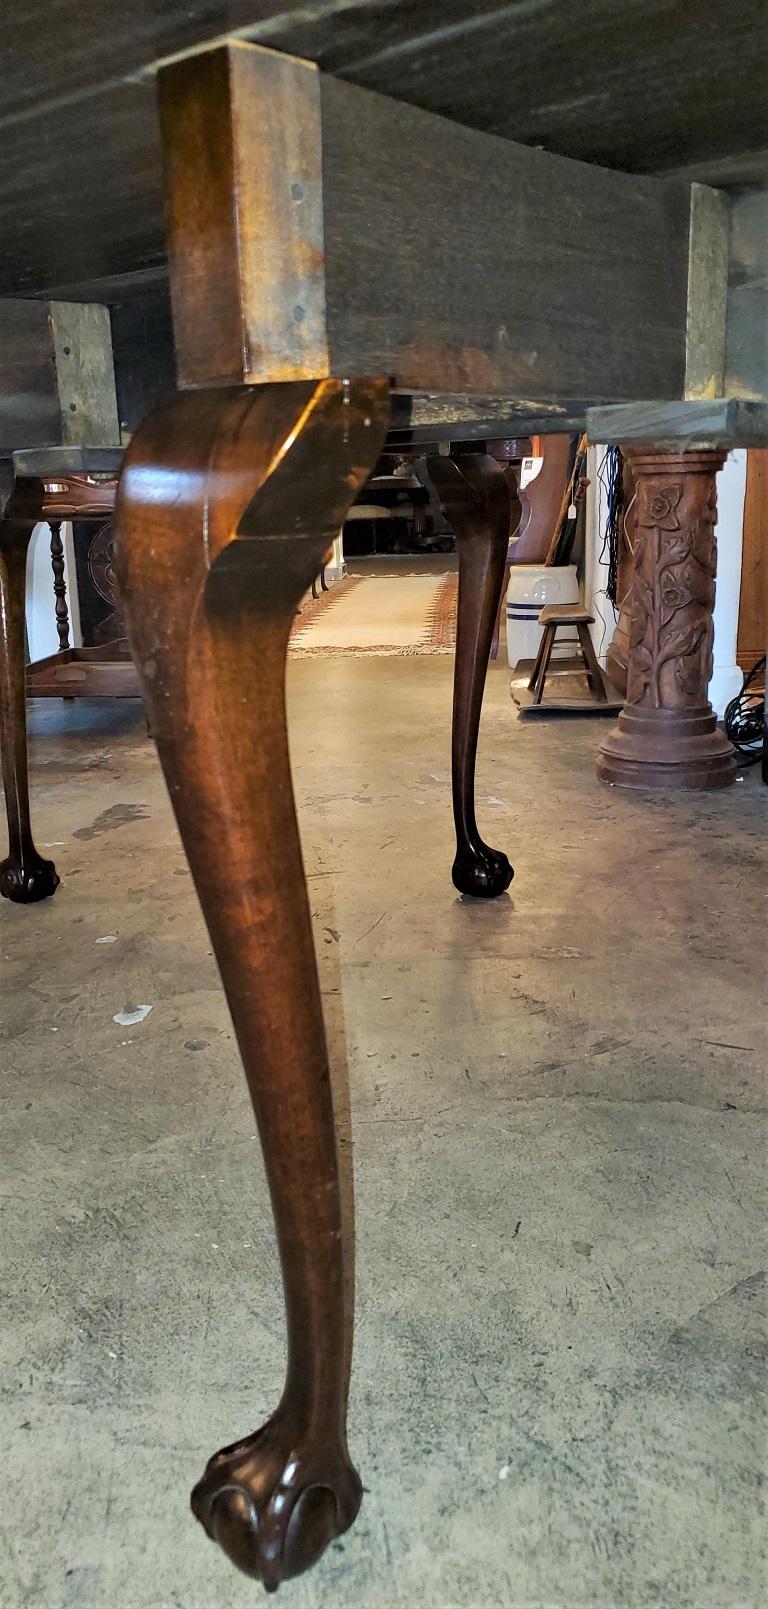 18th Century Philadelphia Mahogany Hunt Table In Good Condition For Sale In Dallas, TX